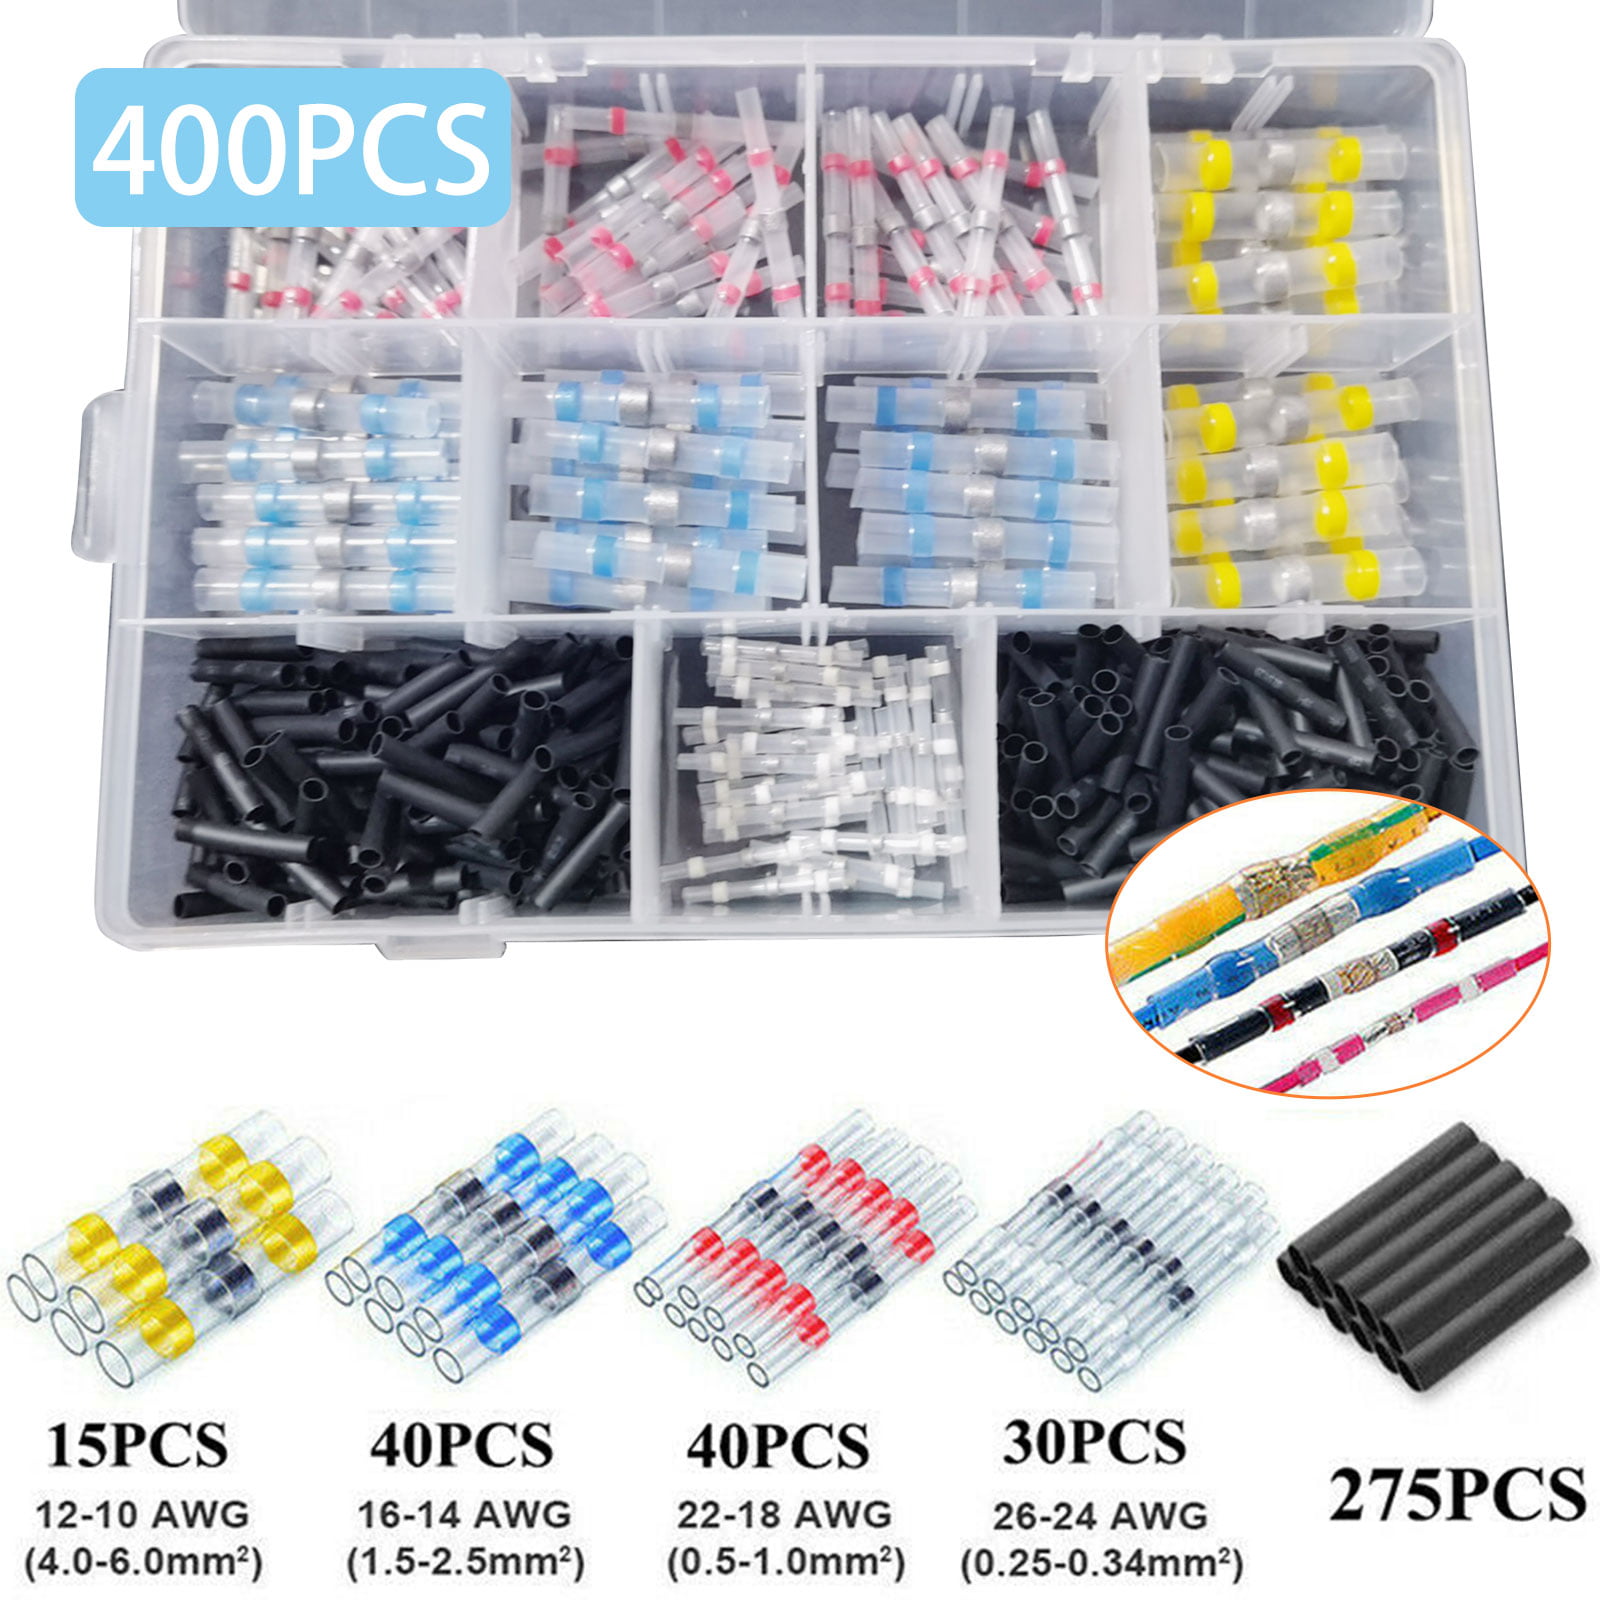 400PCS Waterproof Solder Seal Heat Shrink Wire Butt Terminal Connectors Kit Set 